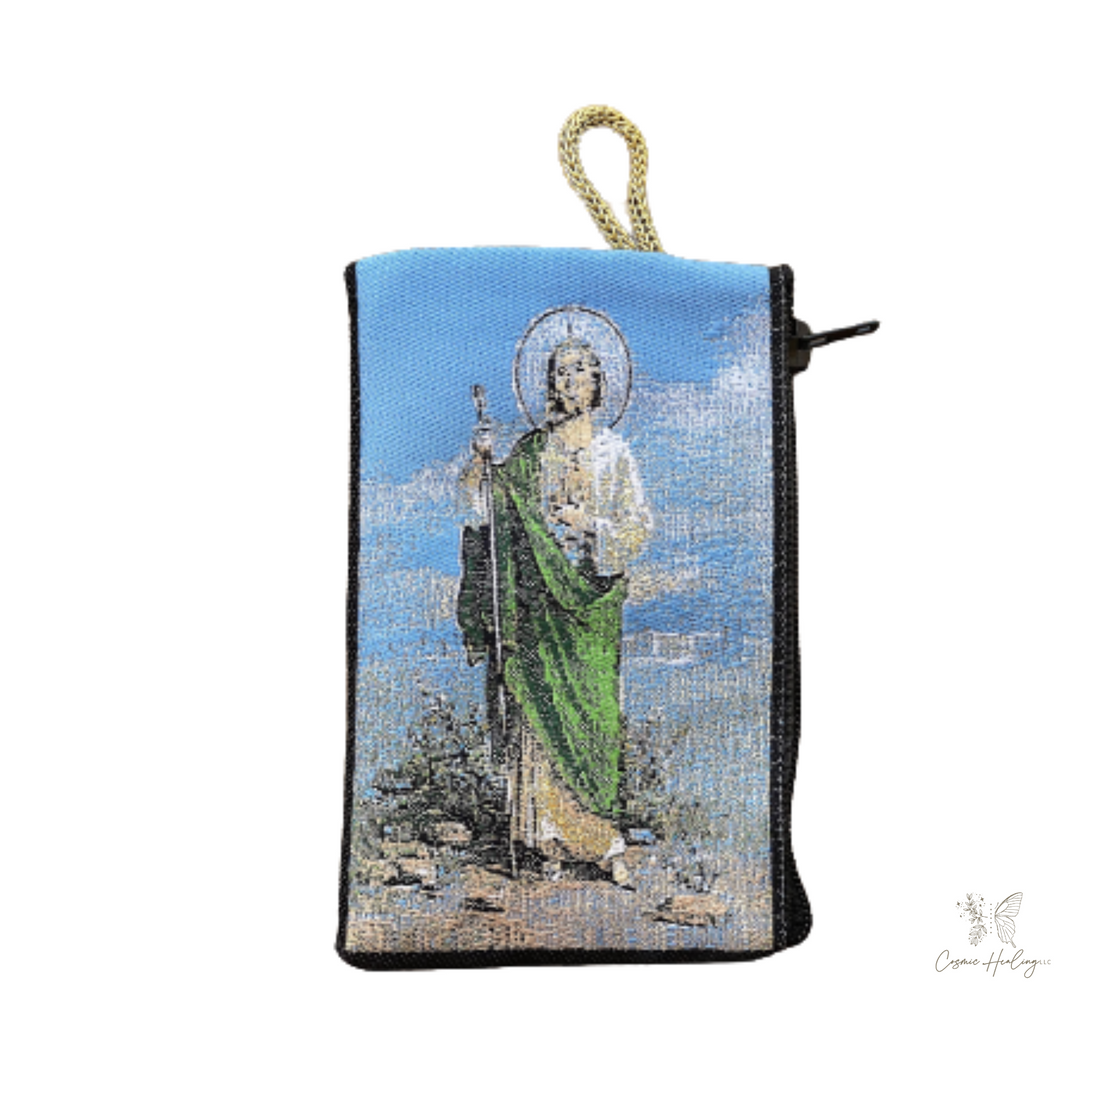 Woven San Judas Tadeo Tapestry Rosary Bag